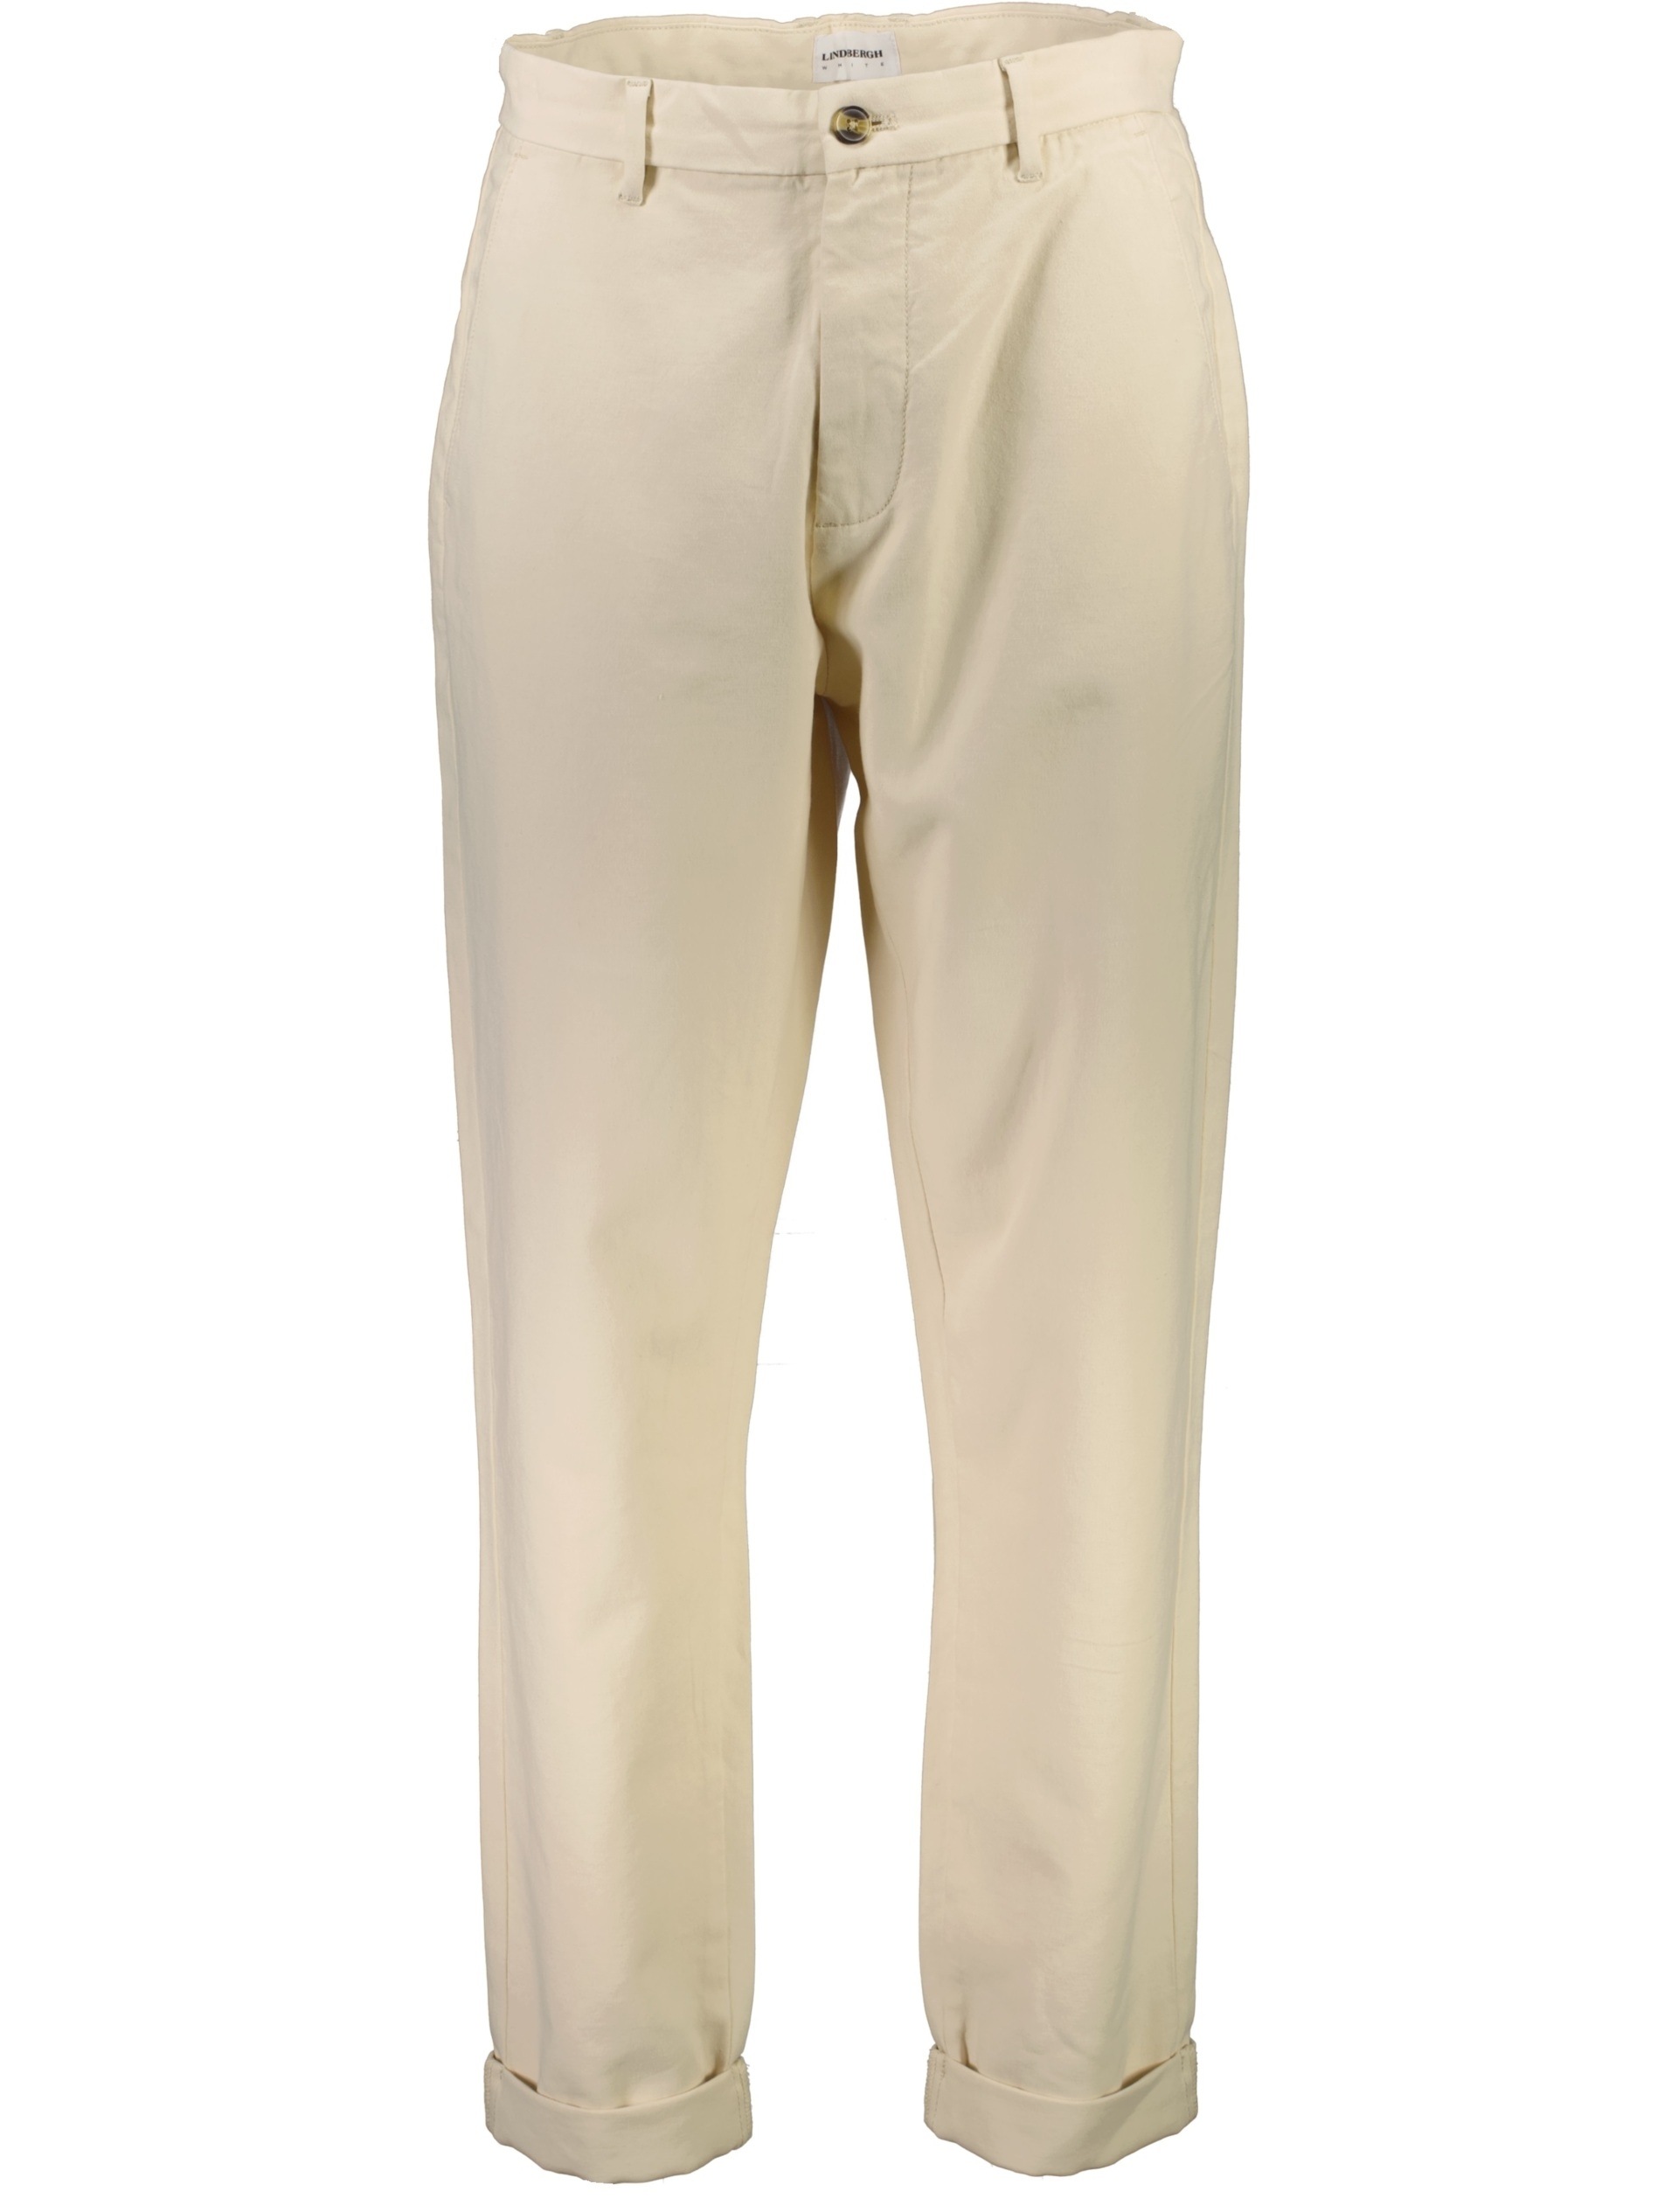 Lindbergh Casual pants white / cream white